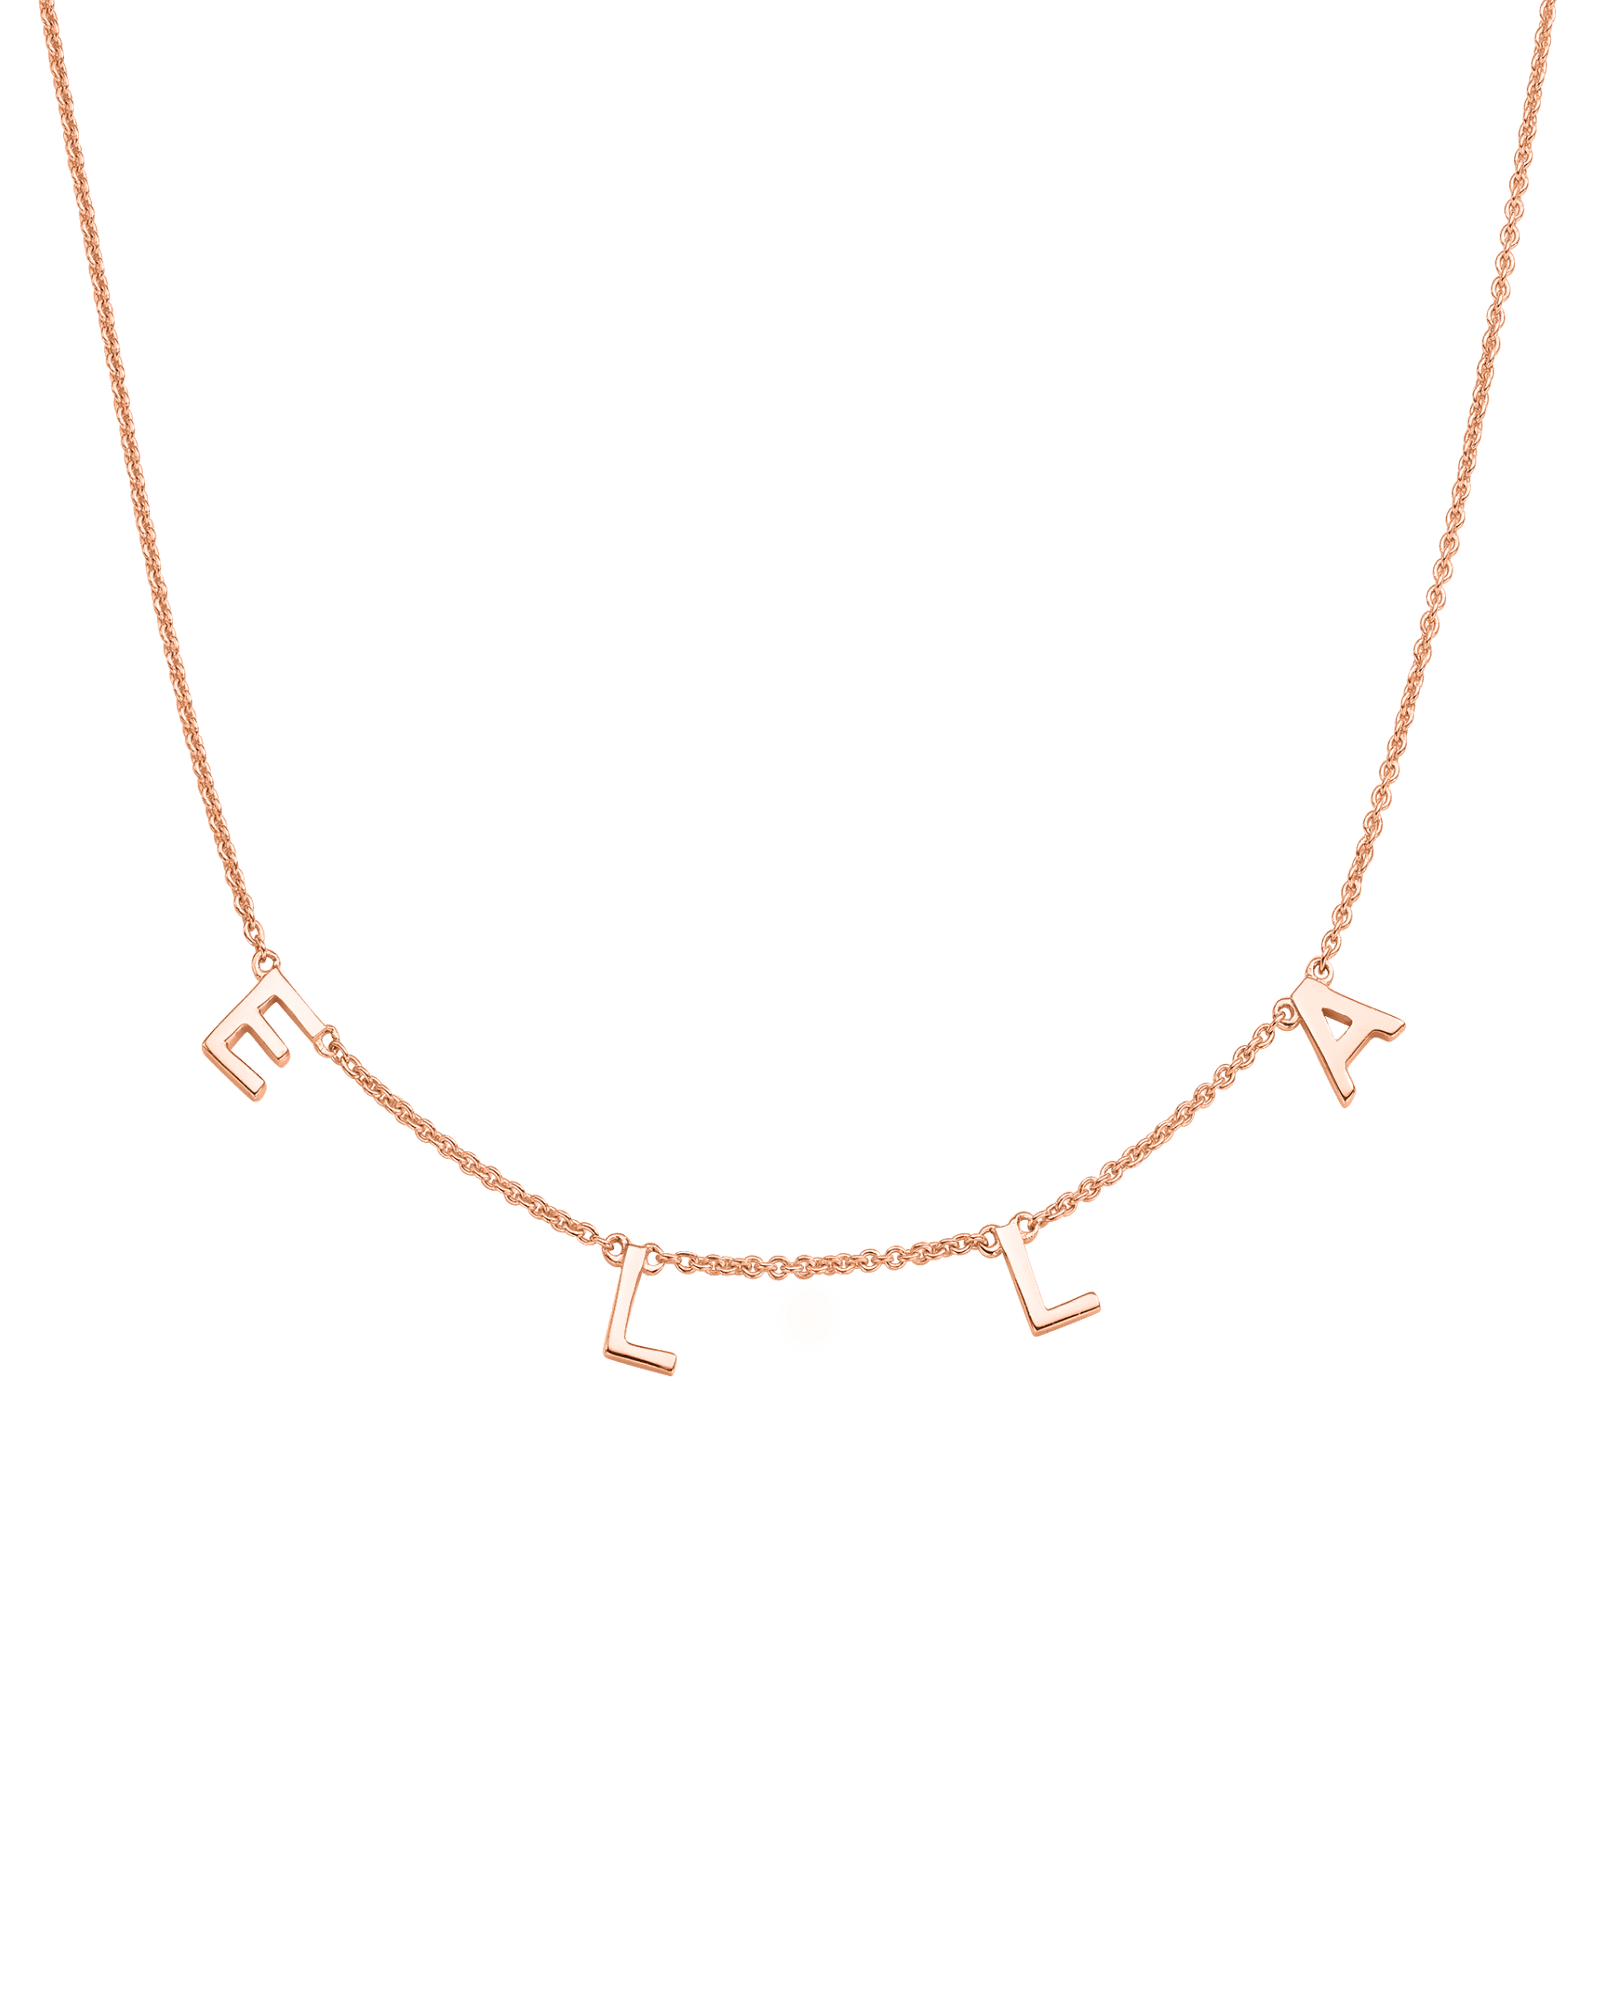 Name Necklace - 18K Gold Vermeil Necklaces magal-dev 